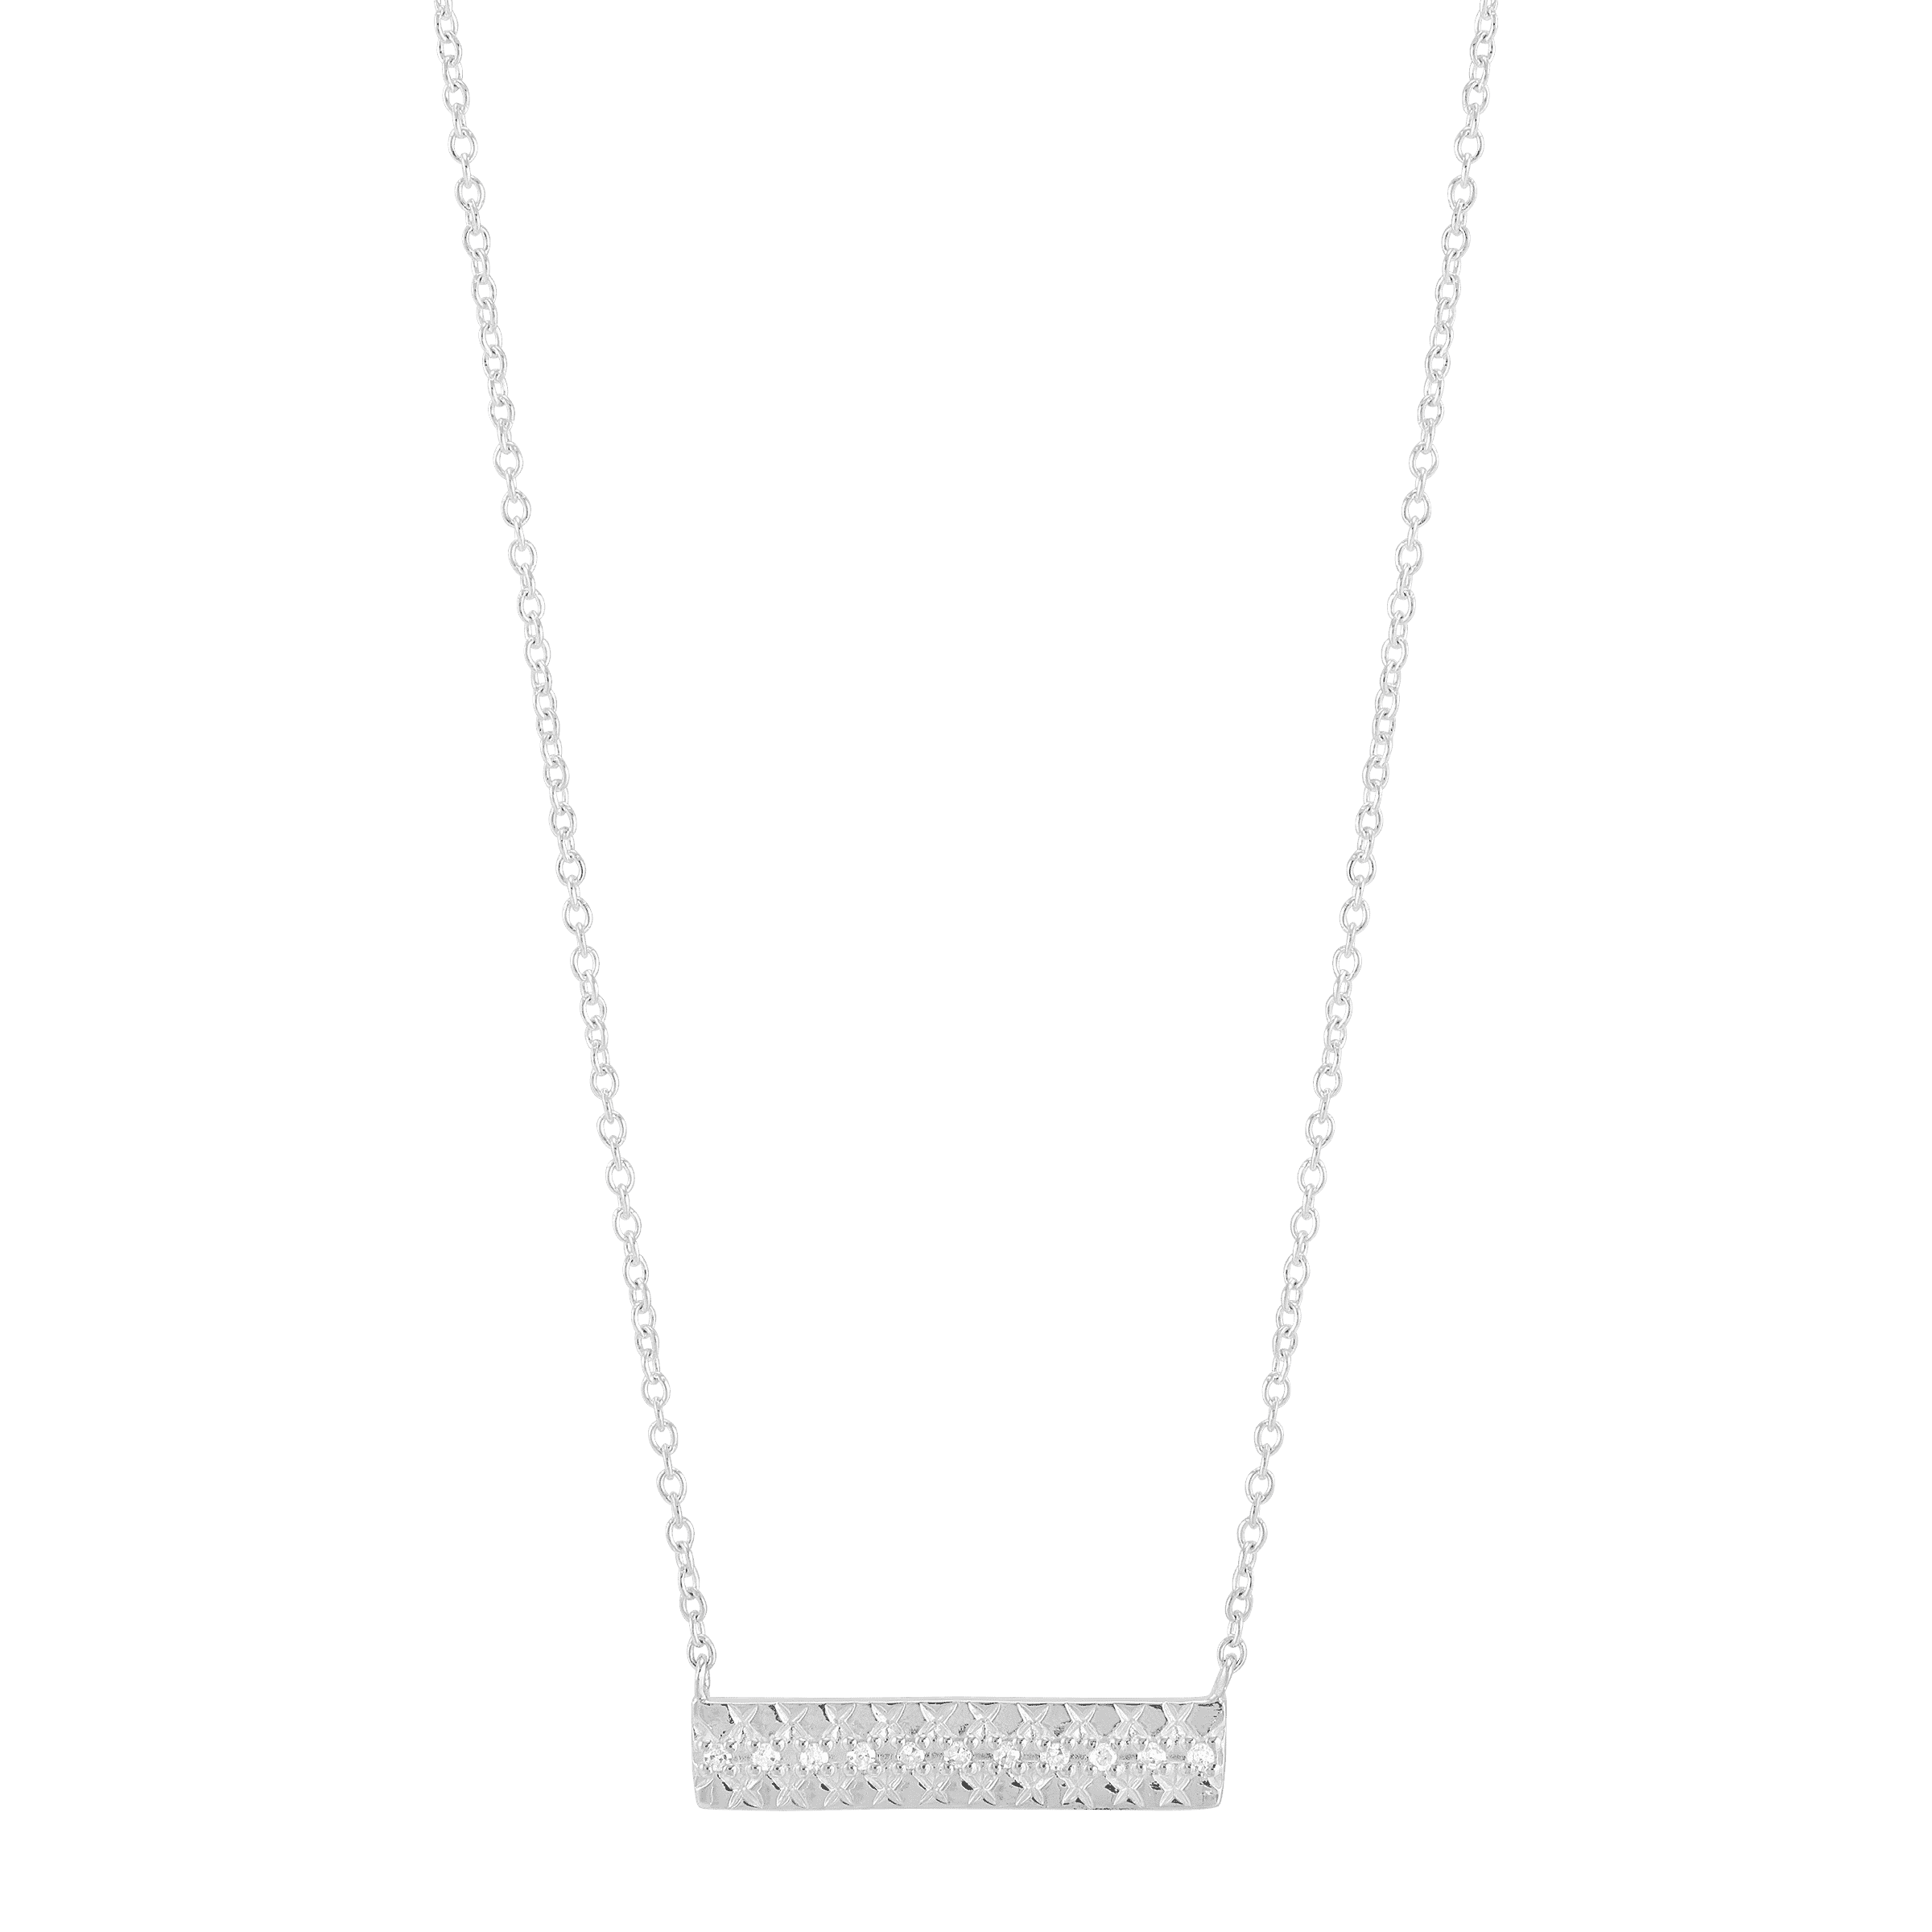 Silpada - Raise the Bar Pendant Necklace - Arktana - Jewelry